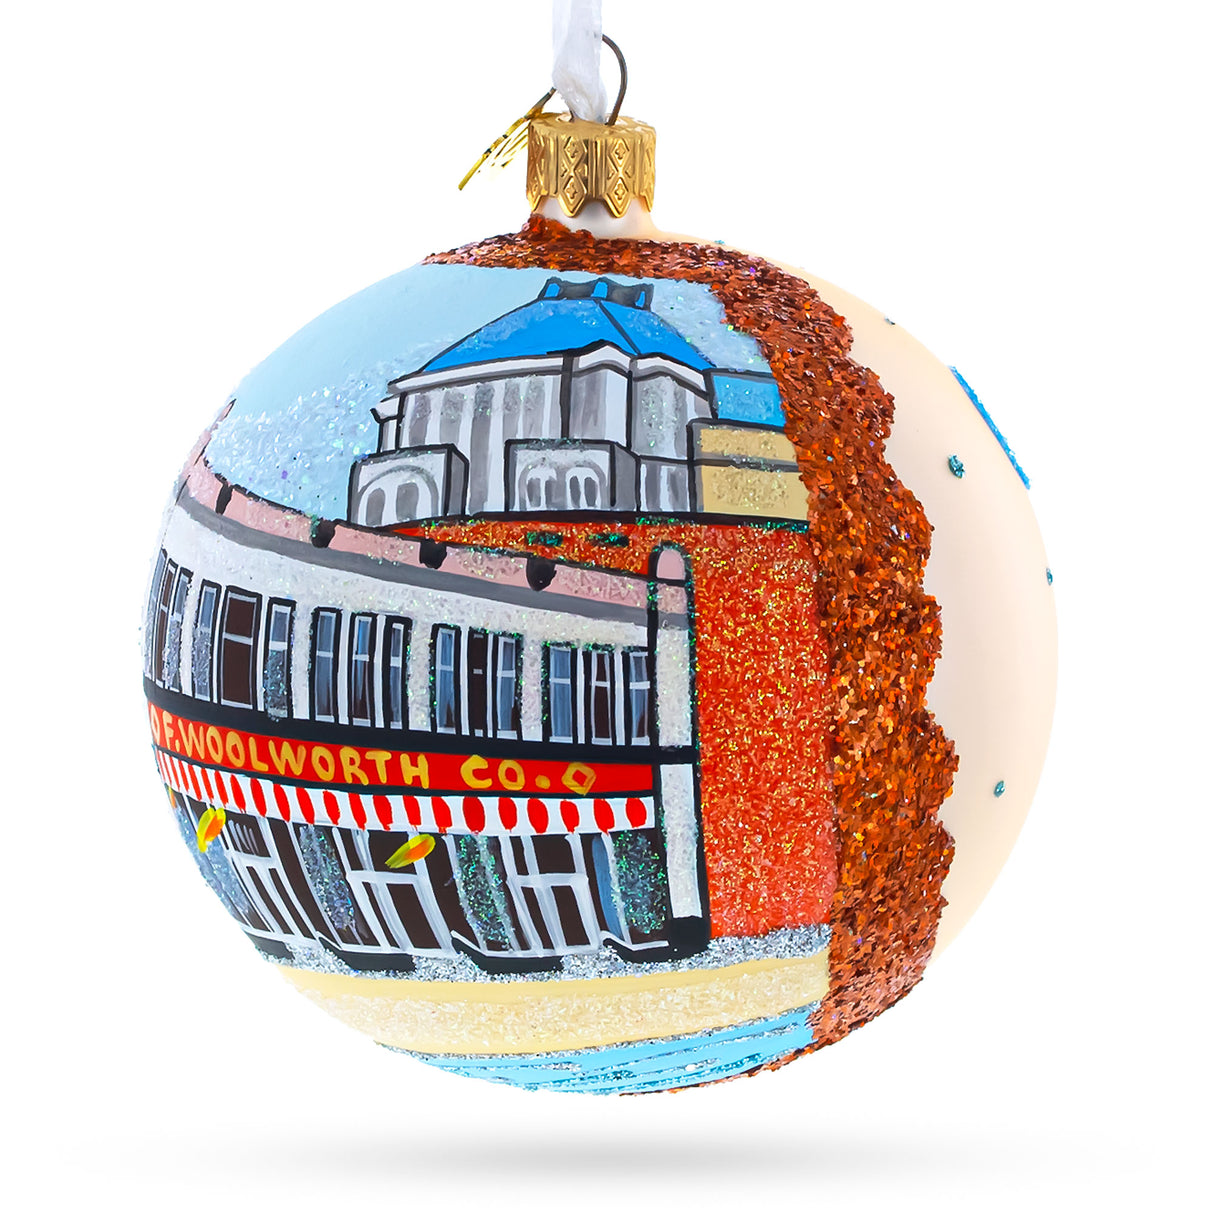 Buy Christmas Ornaments > Travel > North America > USA > North Carolina > Greensboro by BestPysanky Online Gift Ship